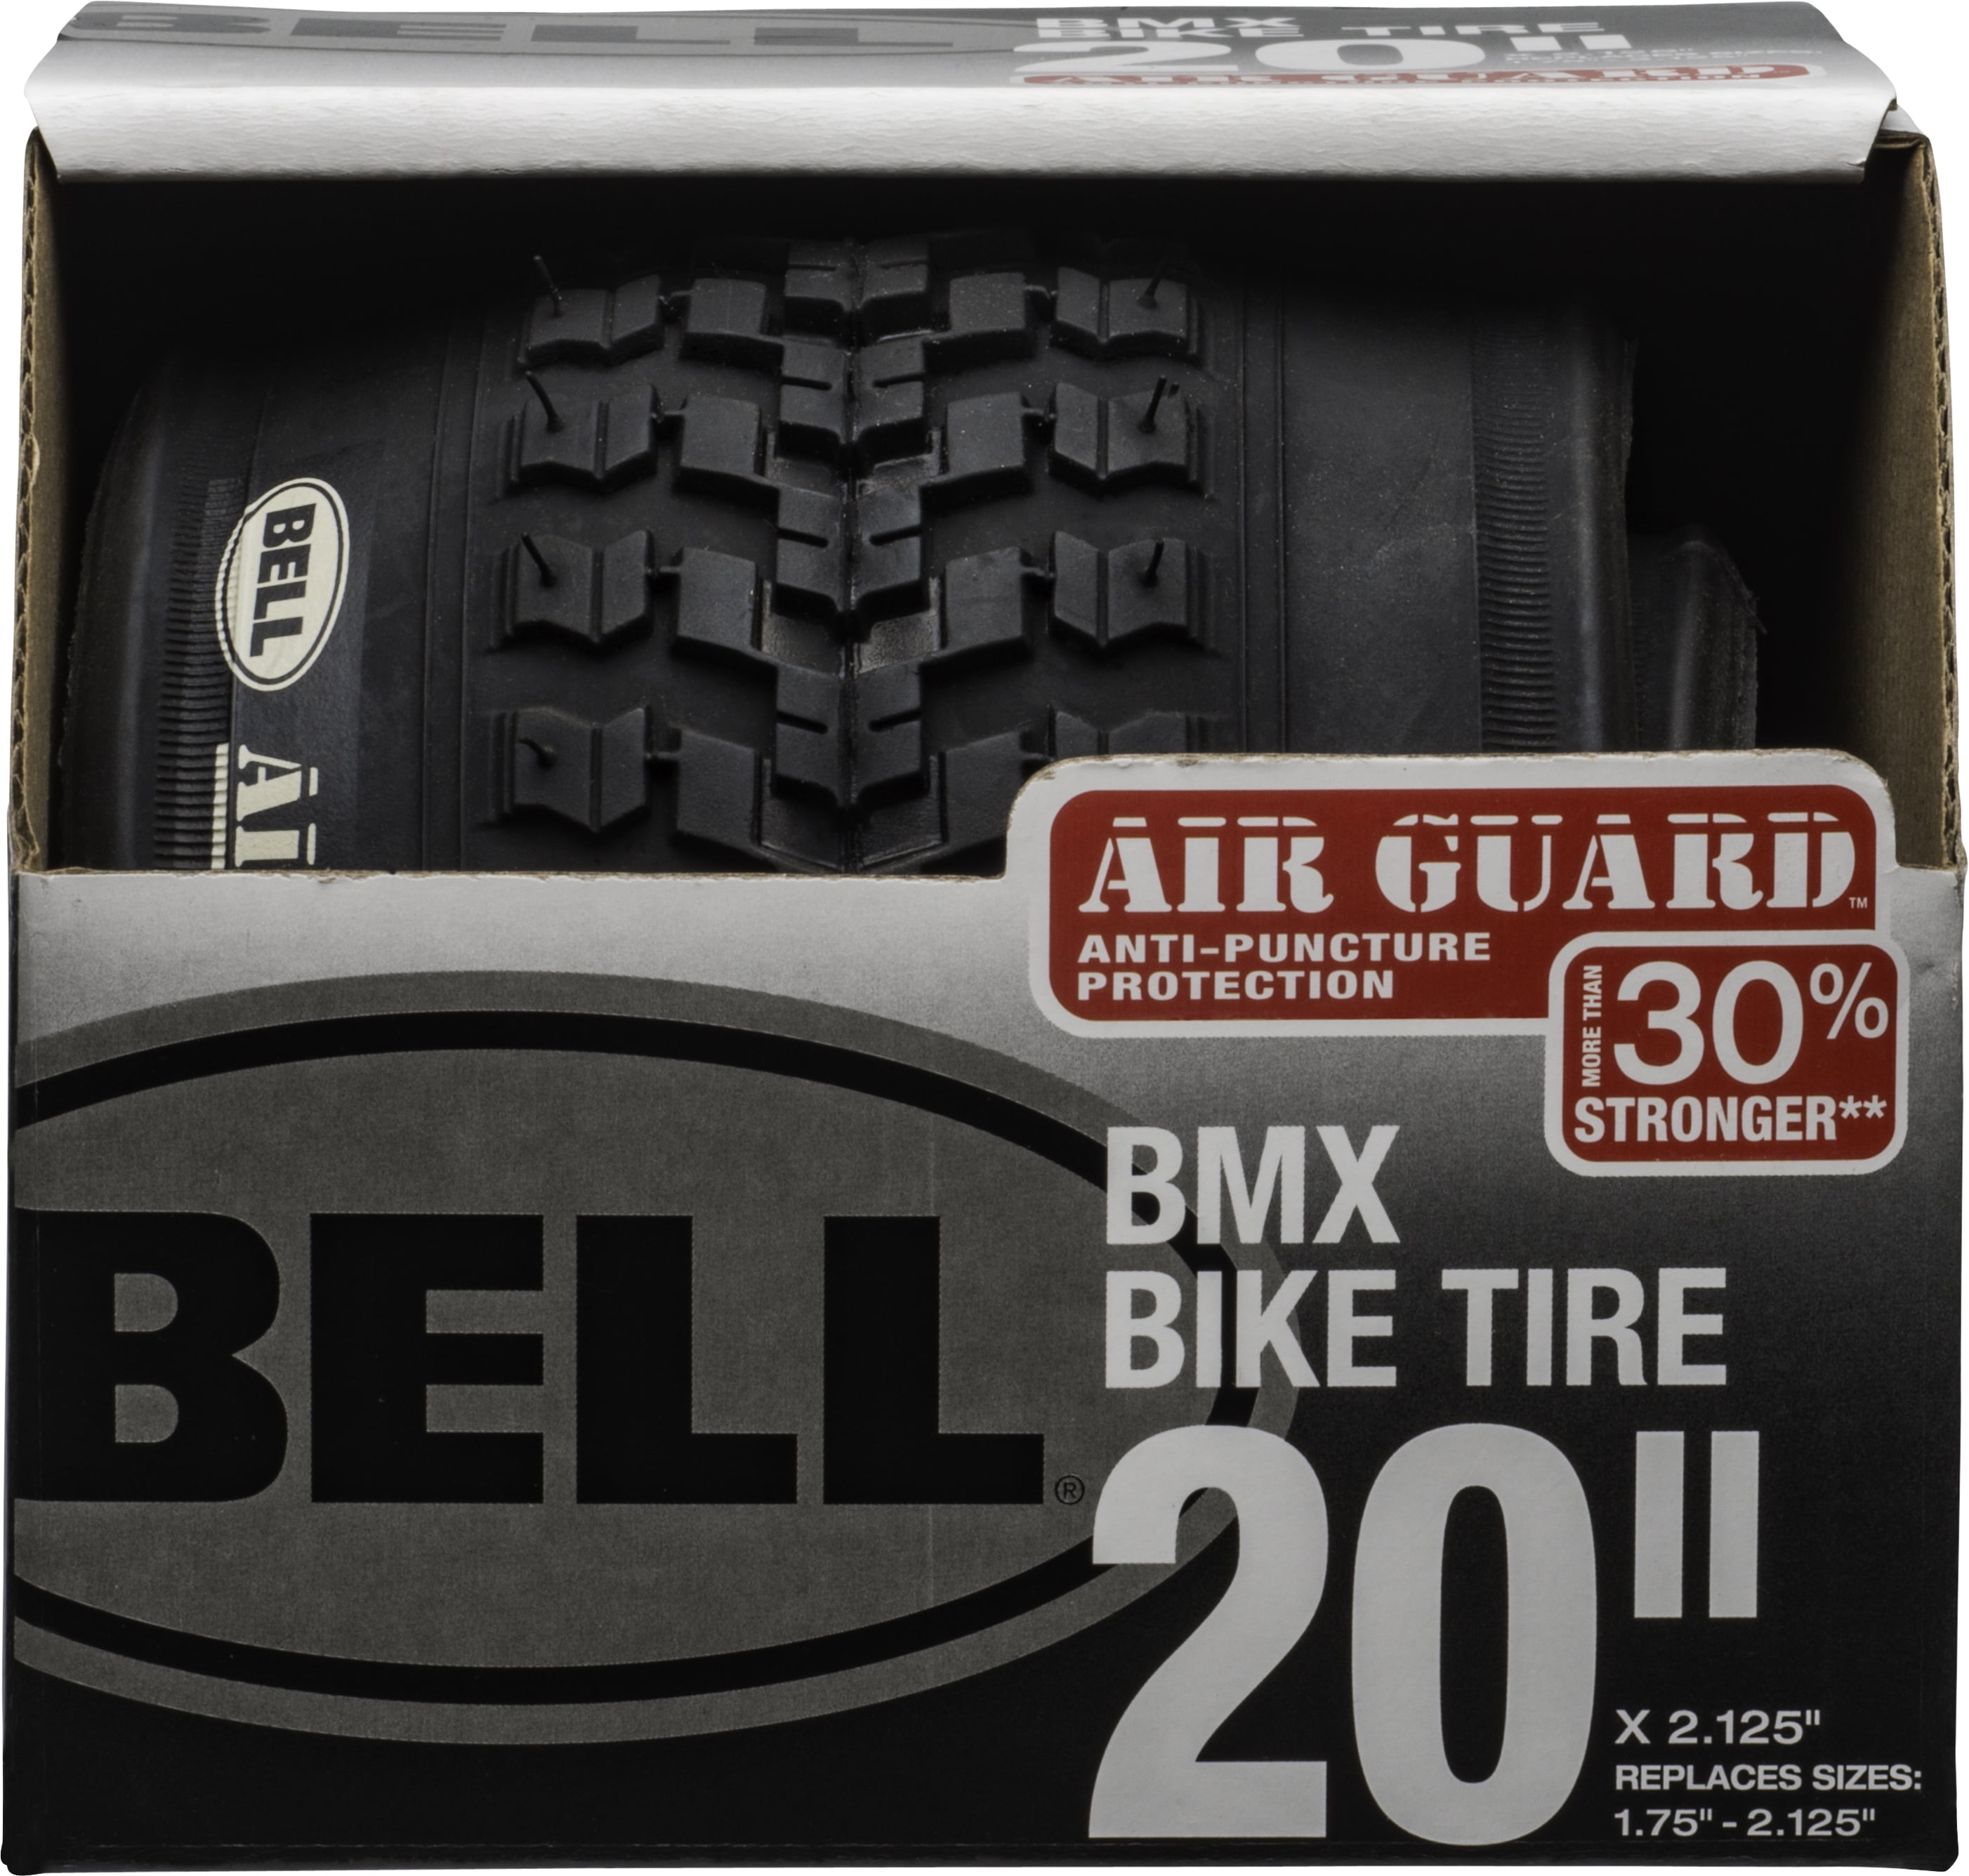 1 BRAND NEW Bell Kids Mountain Bike Tire 20” X 2.10” Air Guard Anti-Puncture 